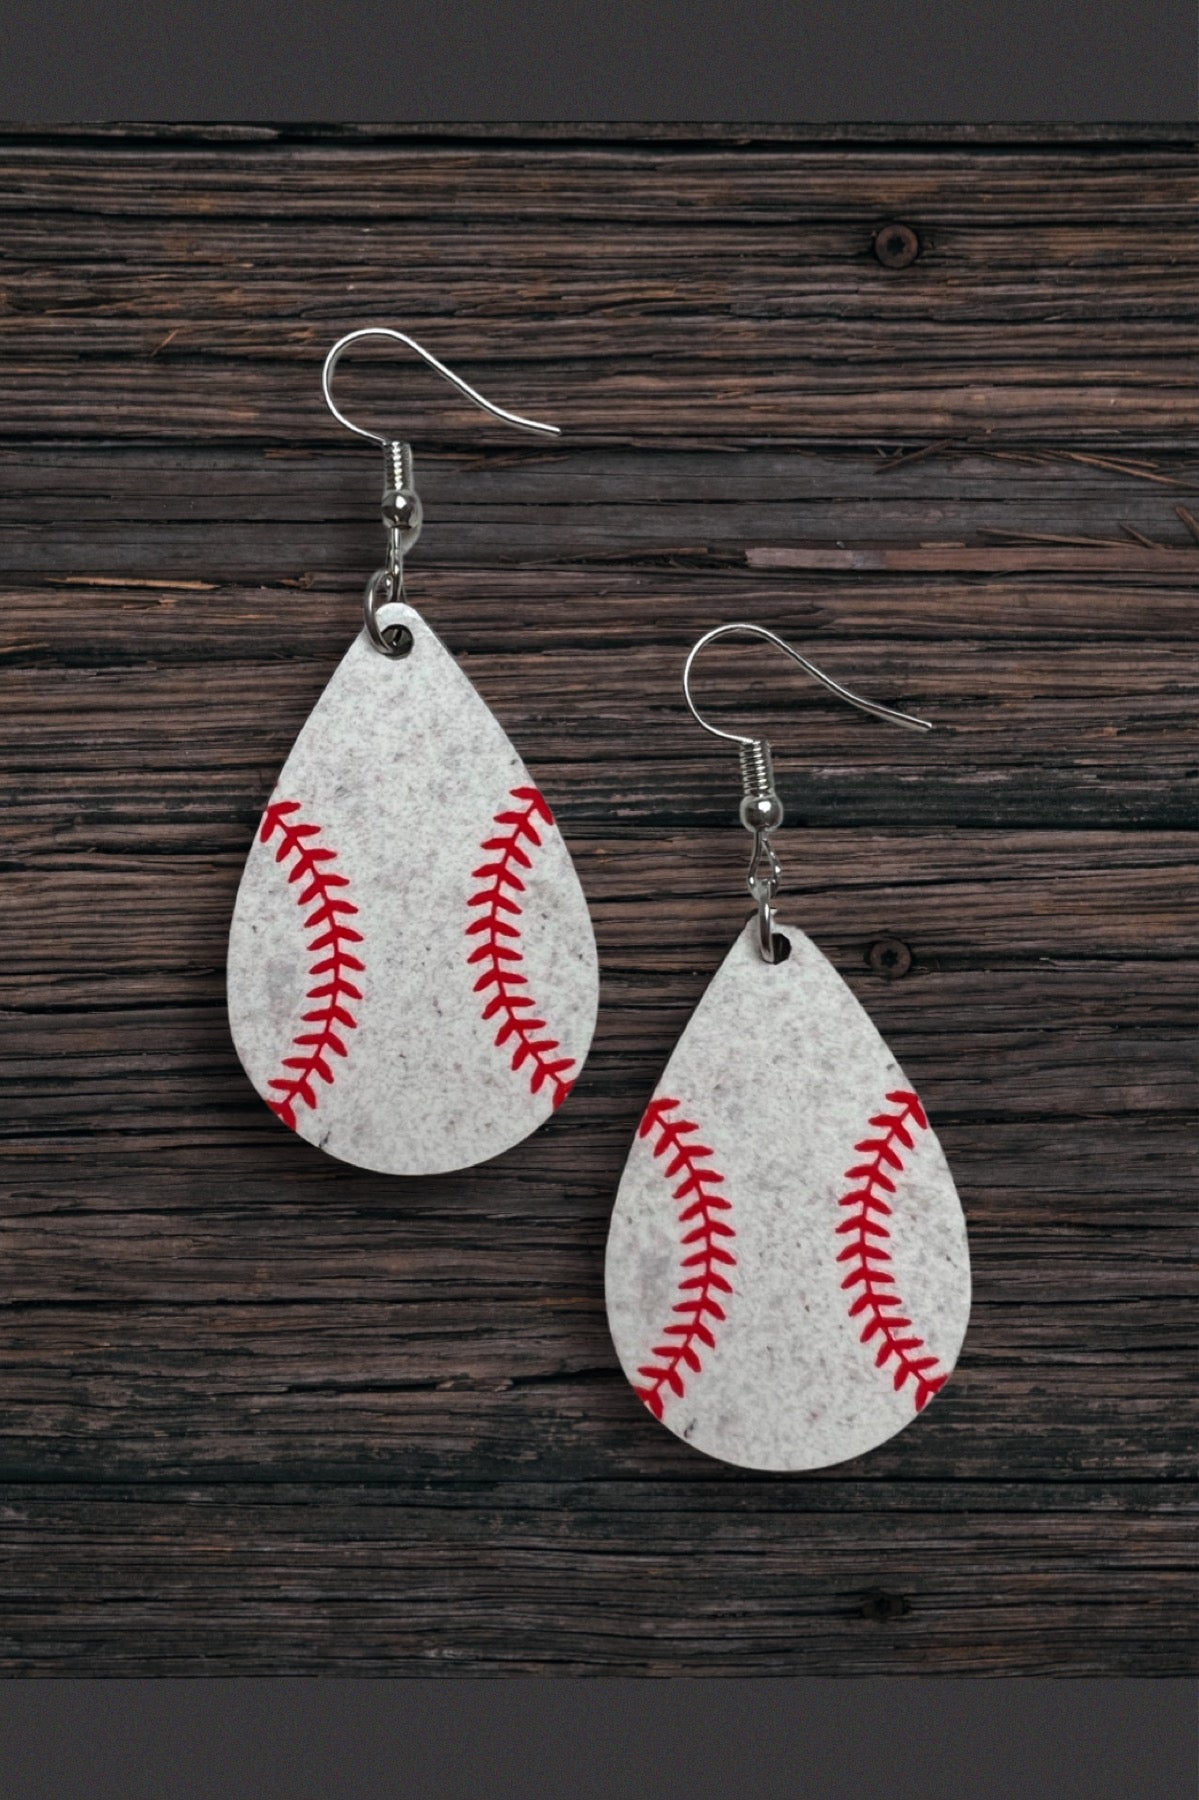 Baseball tear drop earrings